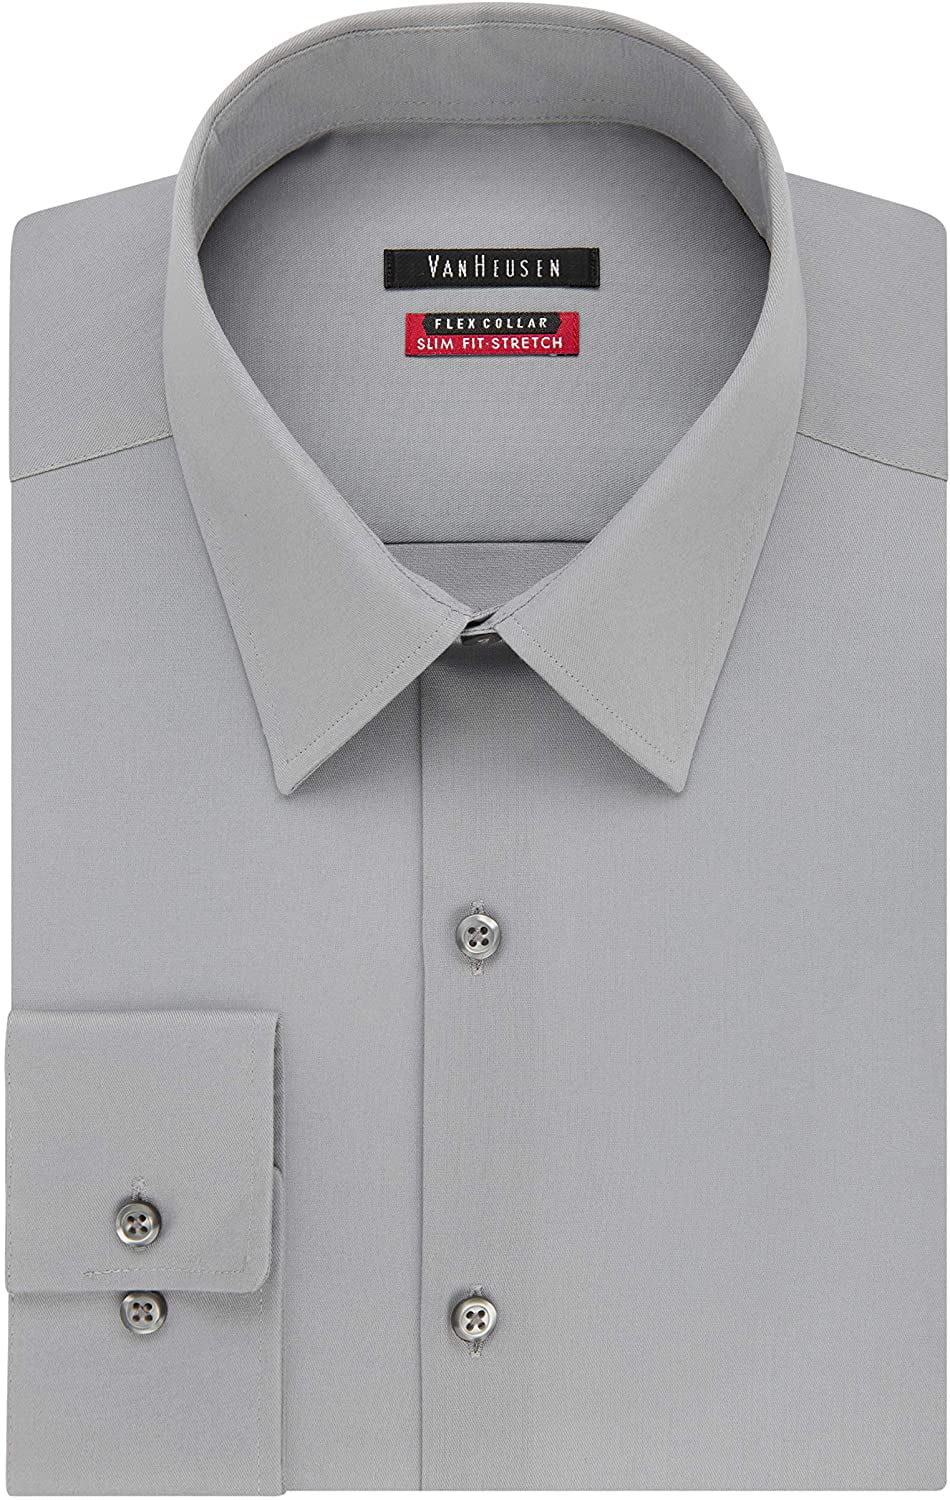 Van Heusen Men's Dress Shirt Slim Fit Flex Collar Stretch Solid 